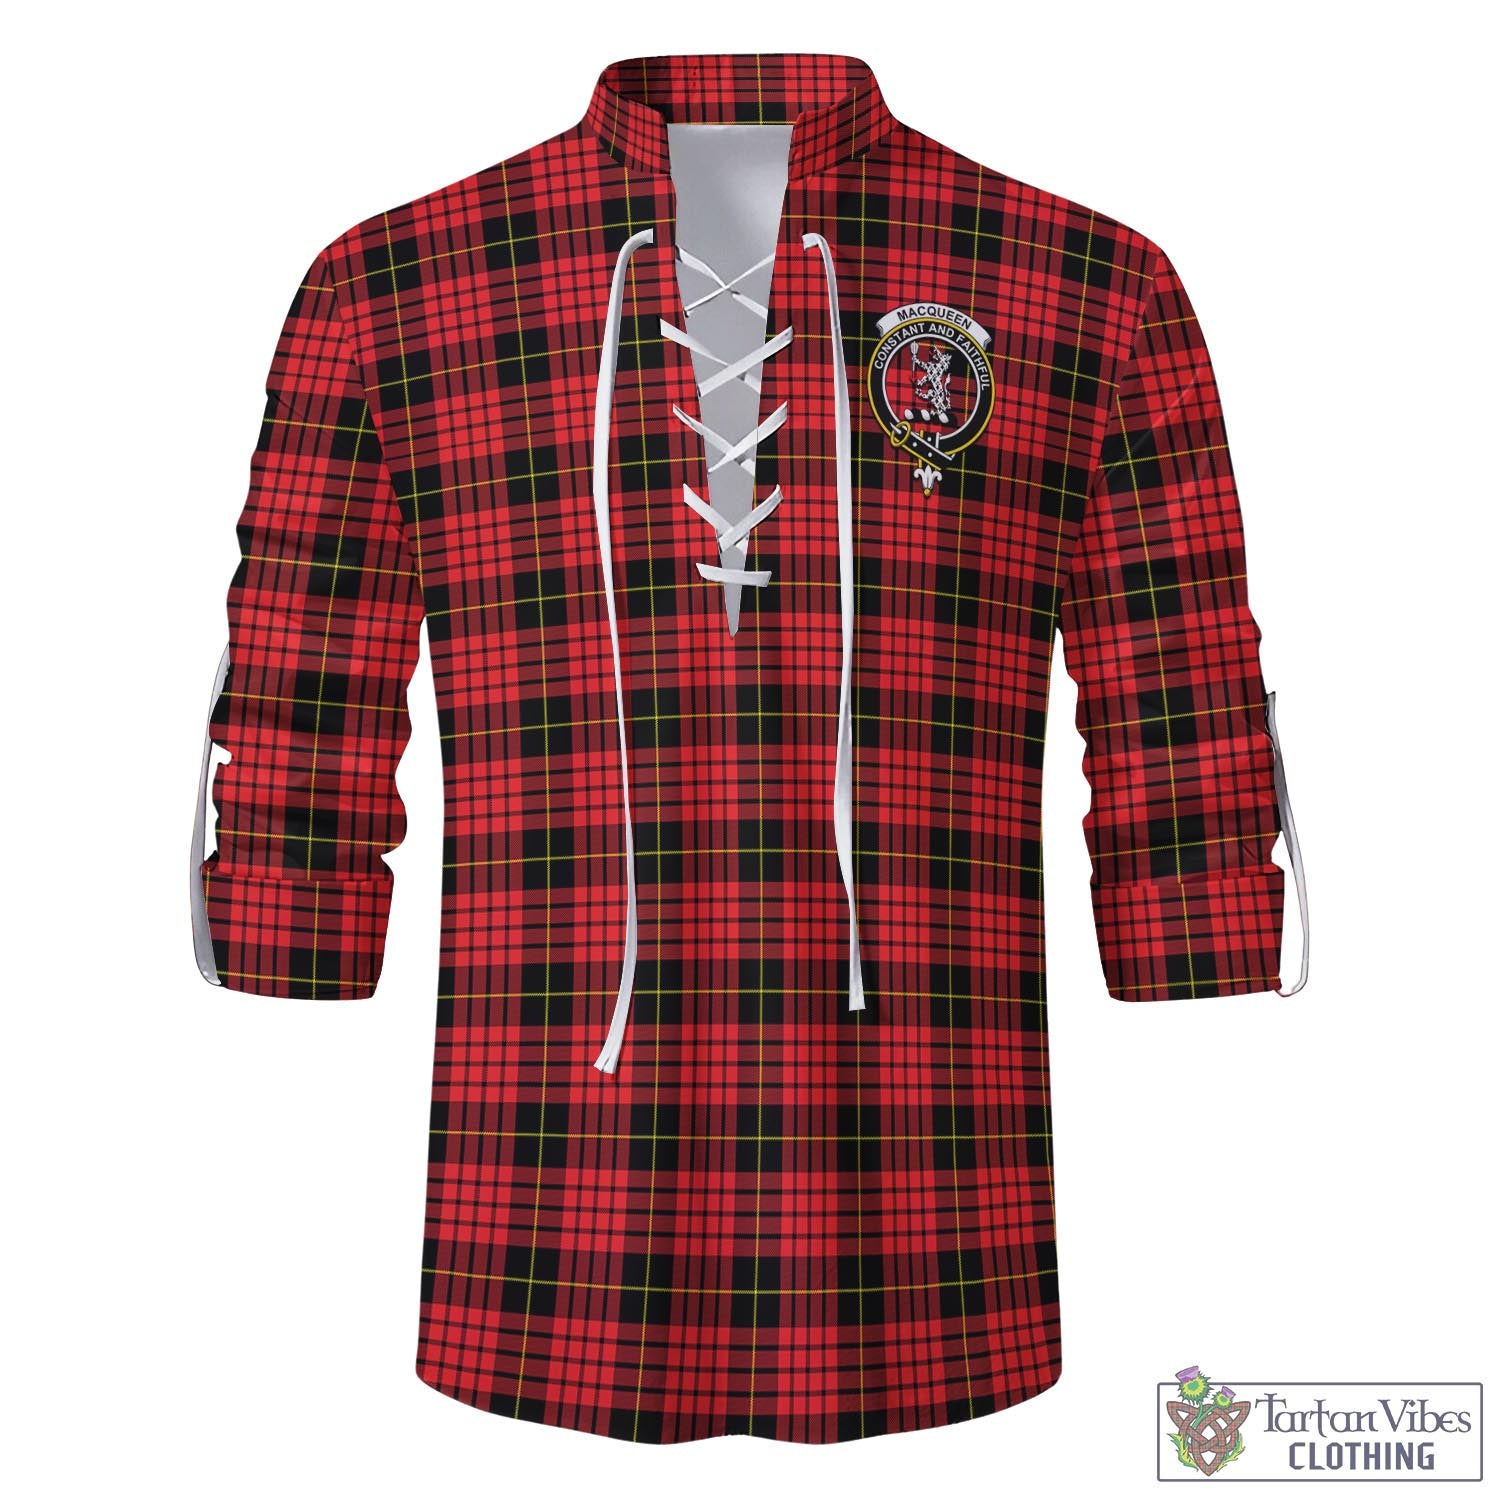 Tartan Vibes Clothing MacQueen Modern Tartan Men's Scottish Traditional Jacobite Ghillie Kilt Shirt with Family Crest